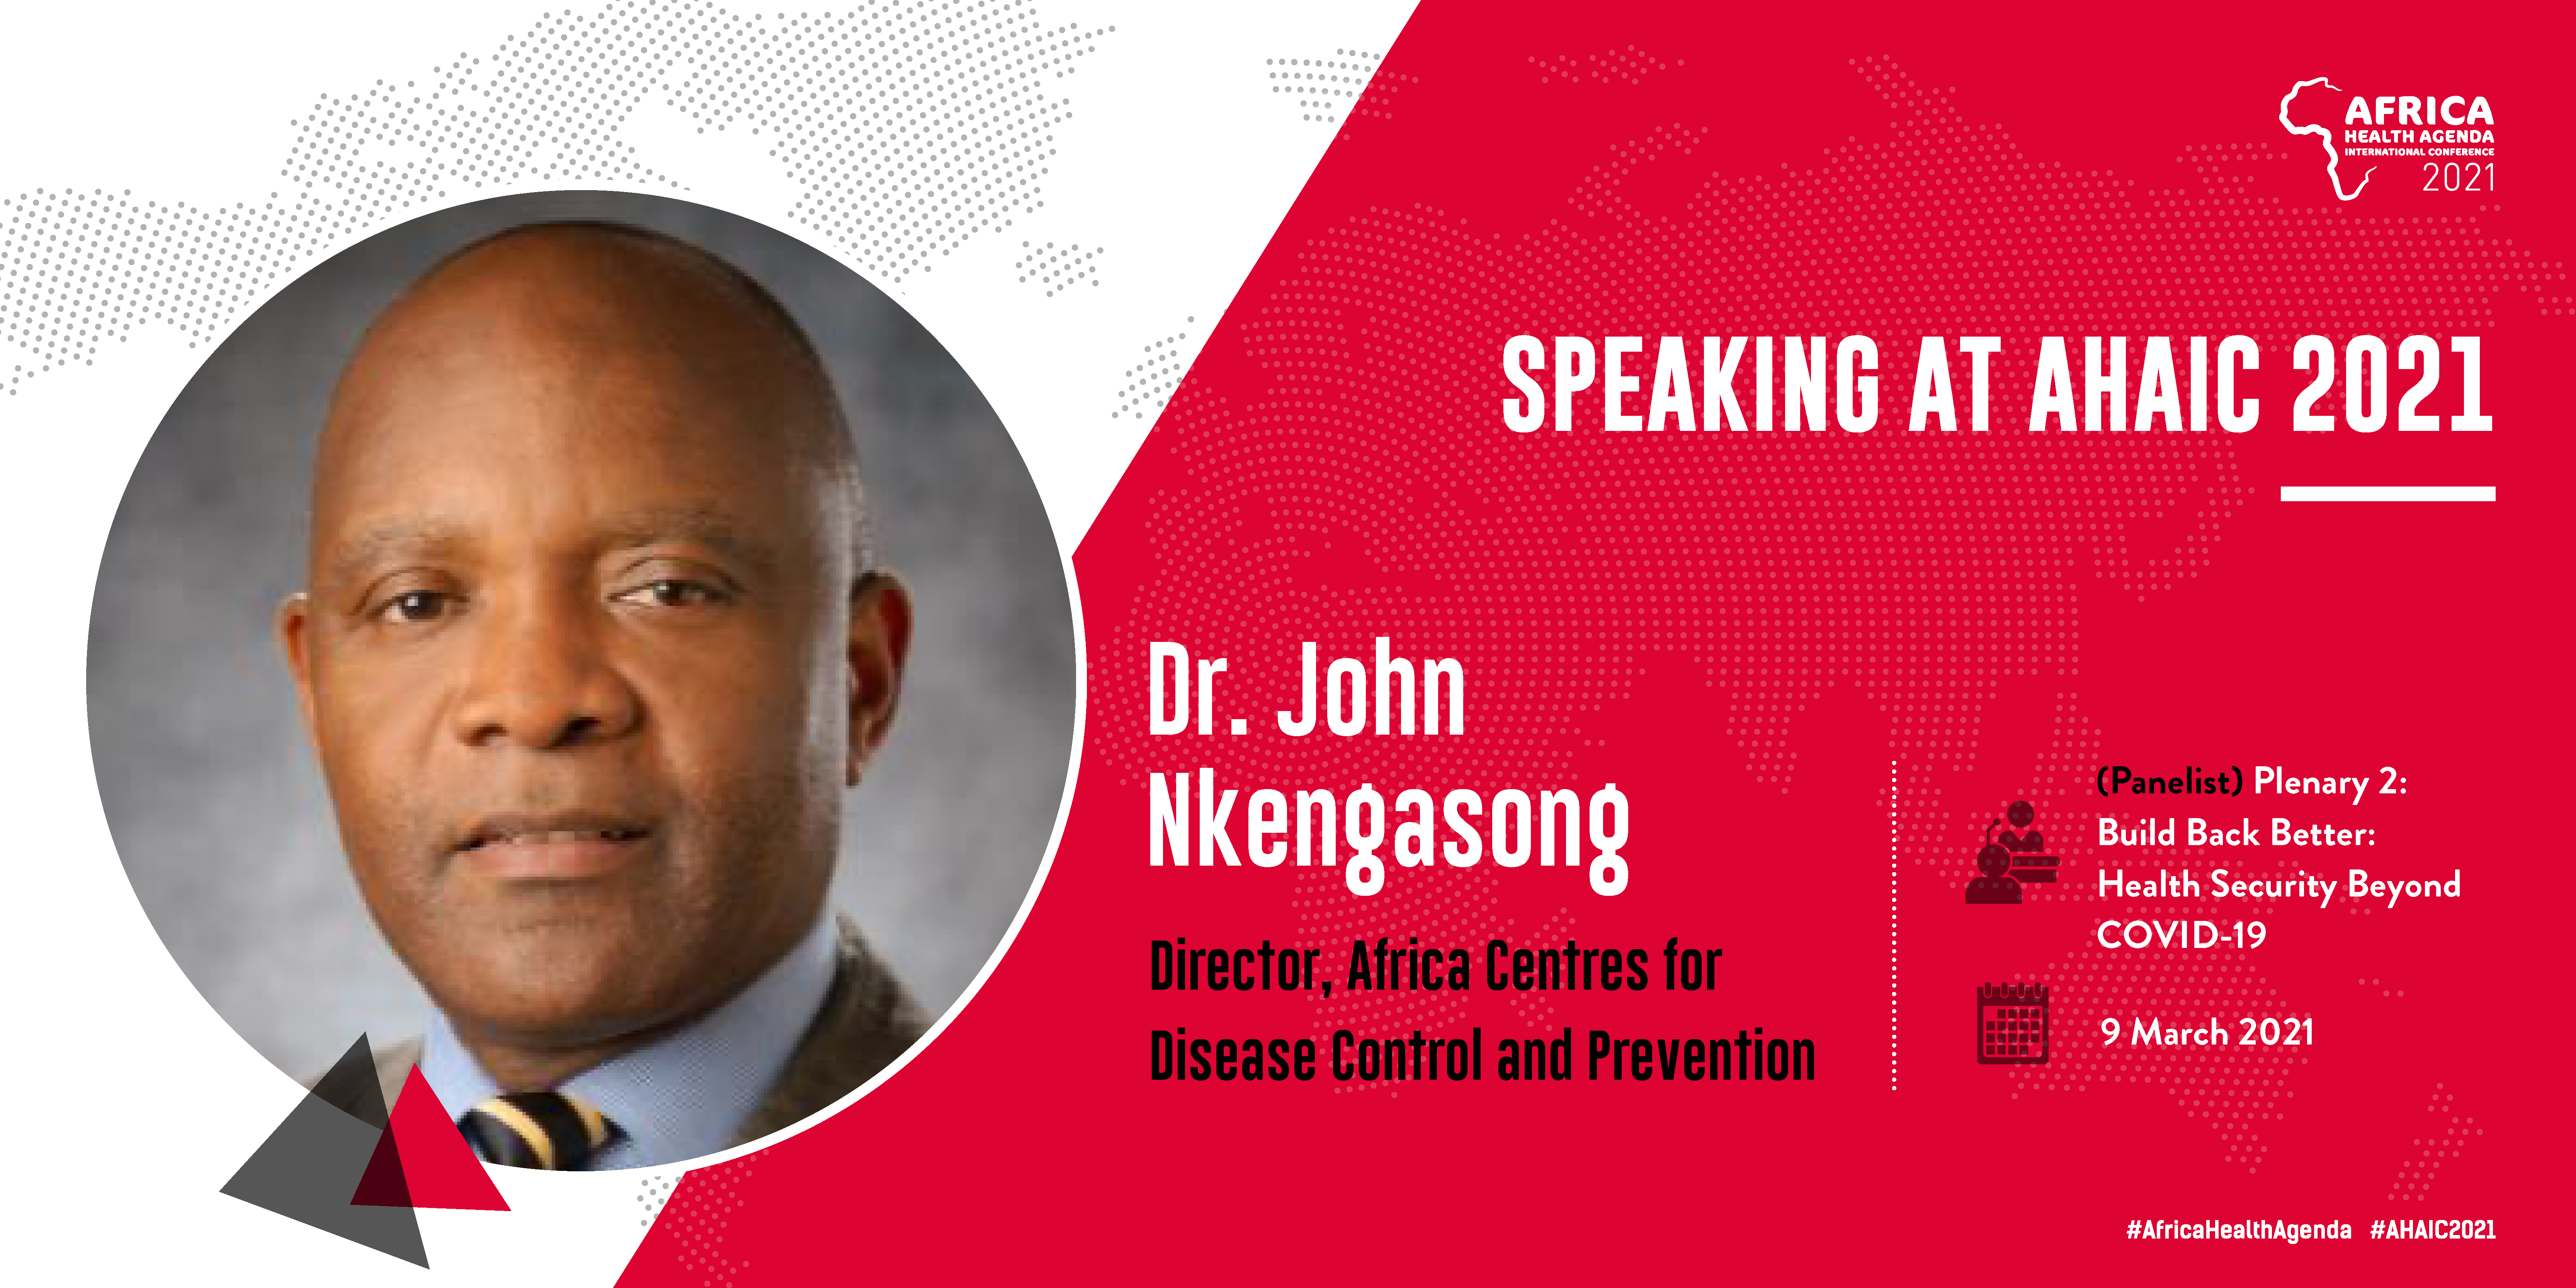 Dr John Nkengasong - Speaking at AHAIC 2021 Conference